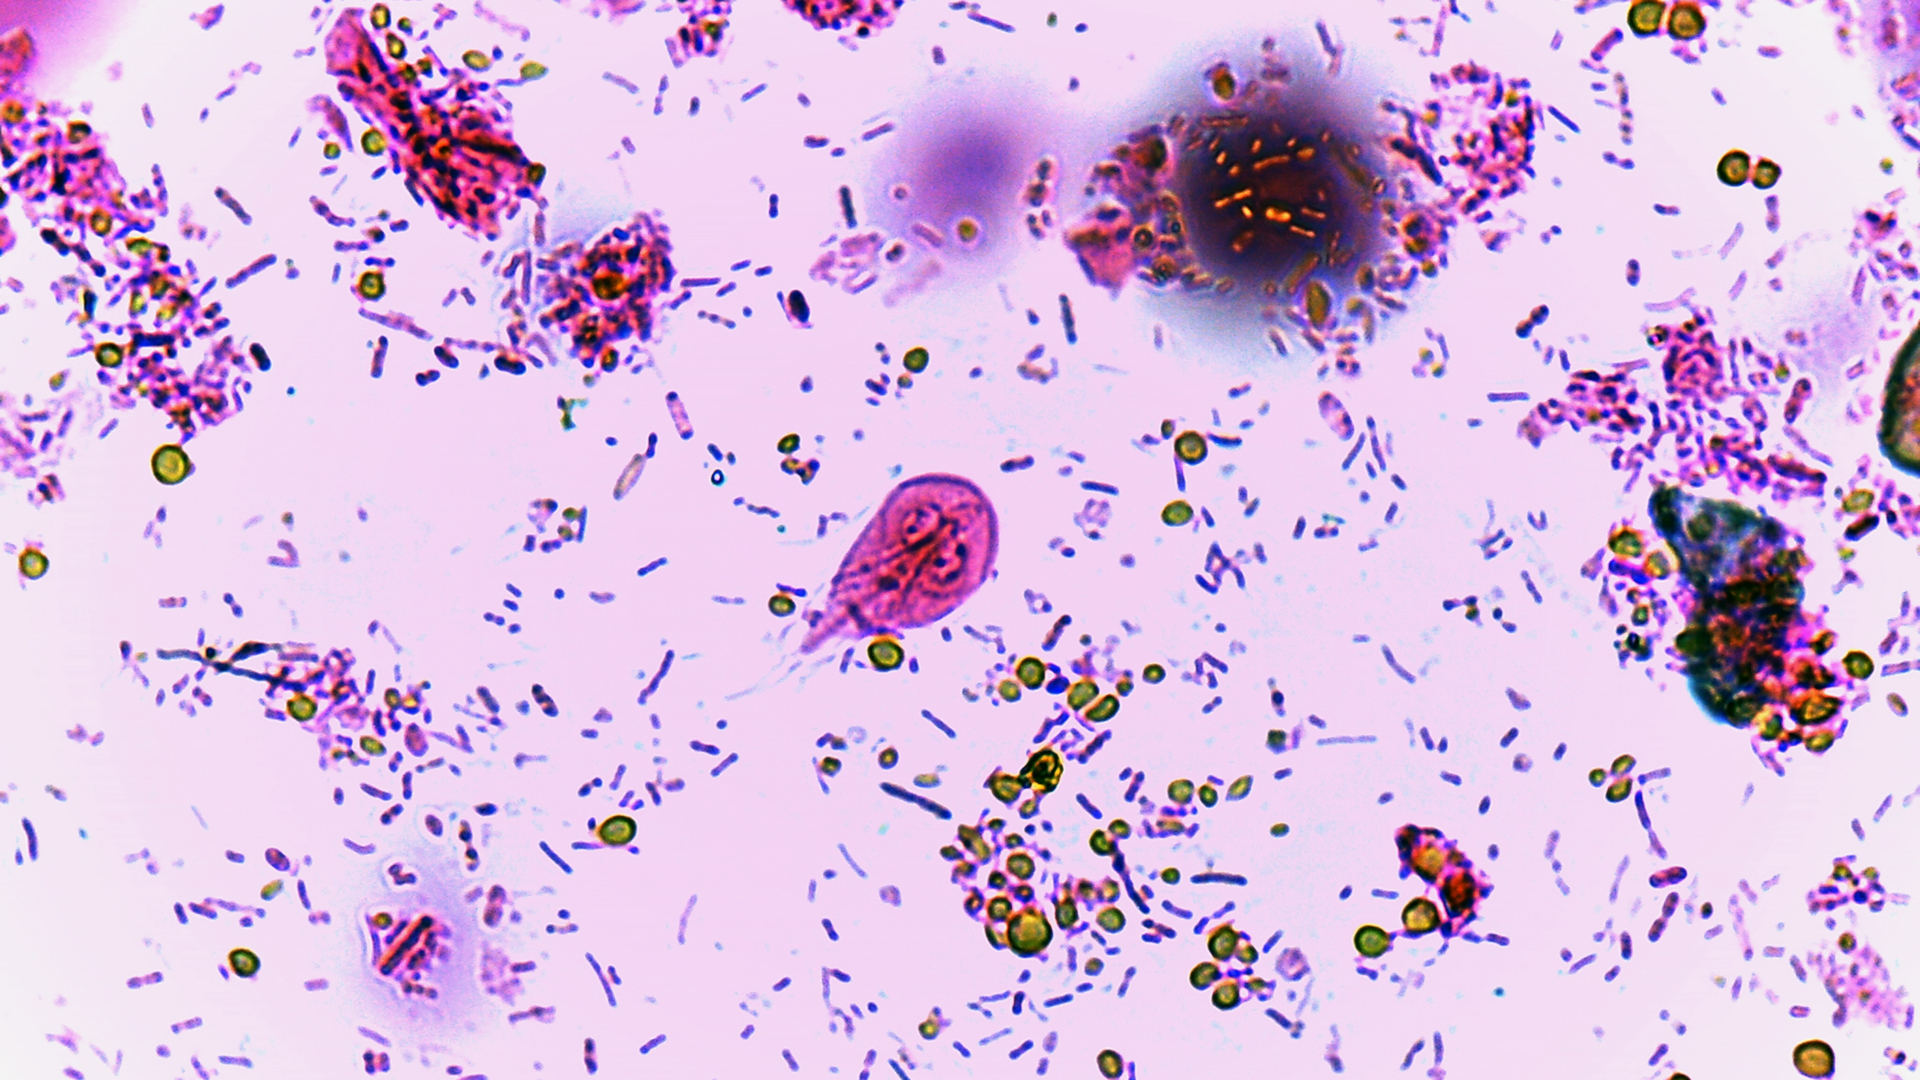 A photo of the giardia lamblia parasite under a microscope.